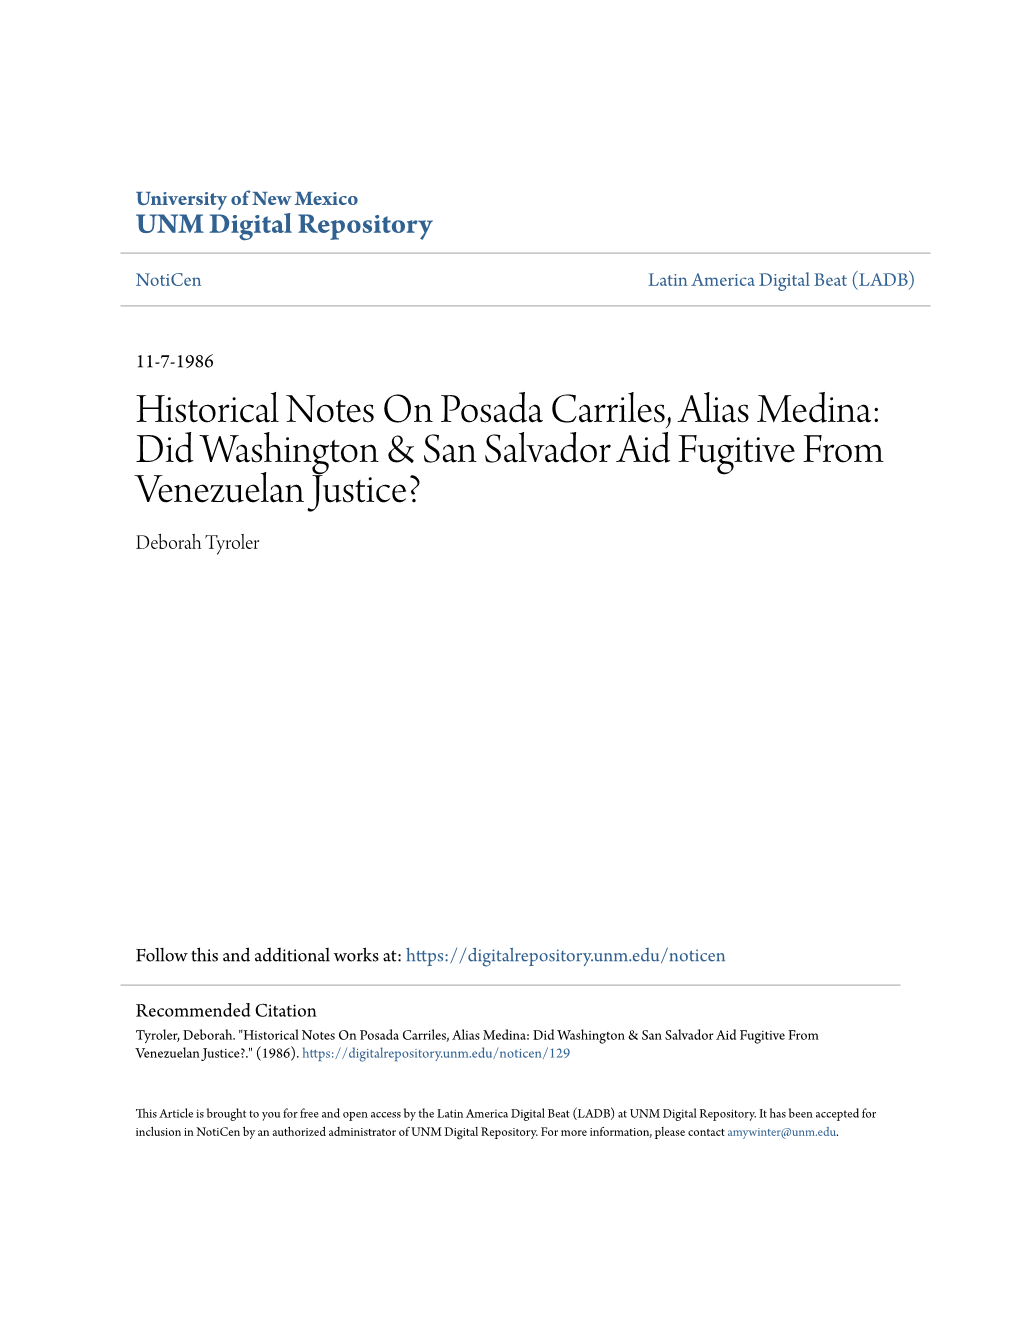 Historical Notes on Posada Carriles, Alias Medina: Did Washington & San Salvador Aid Fugitive from Venezuelan Justice? Deborah Tyroler